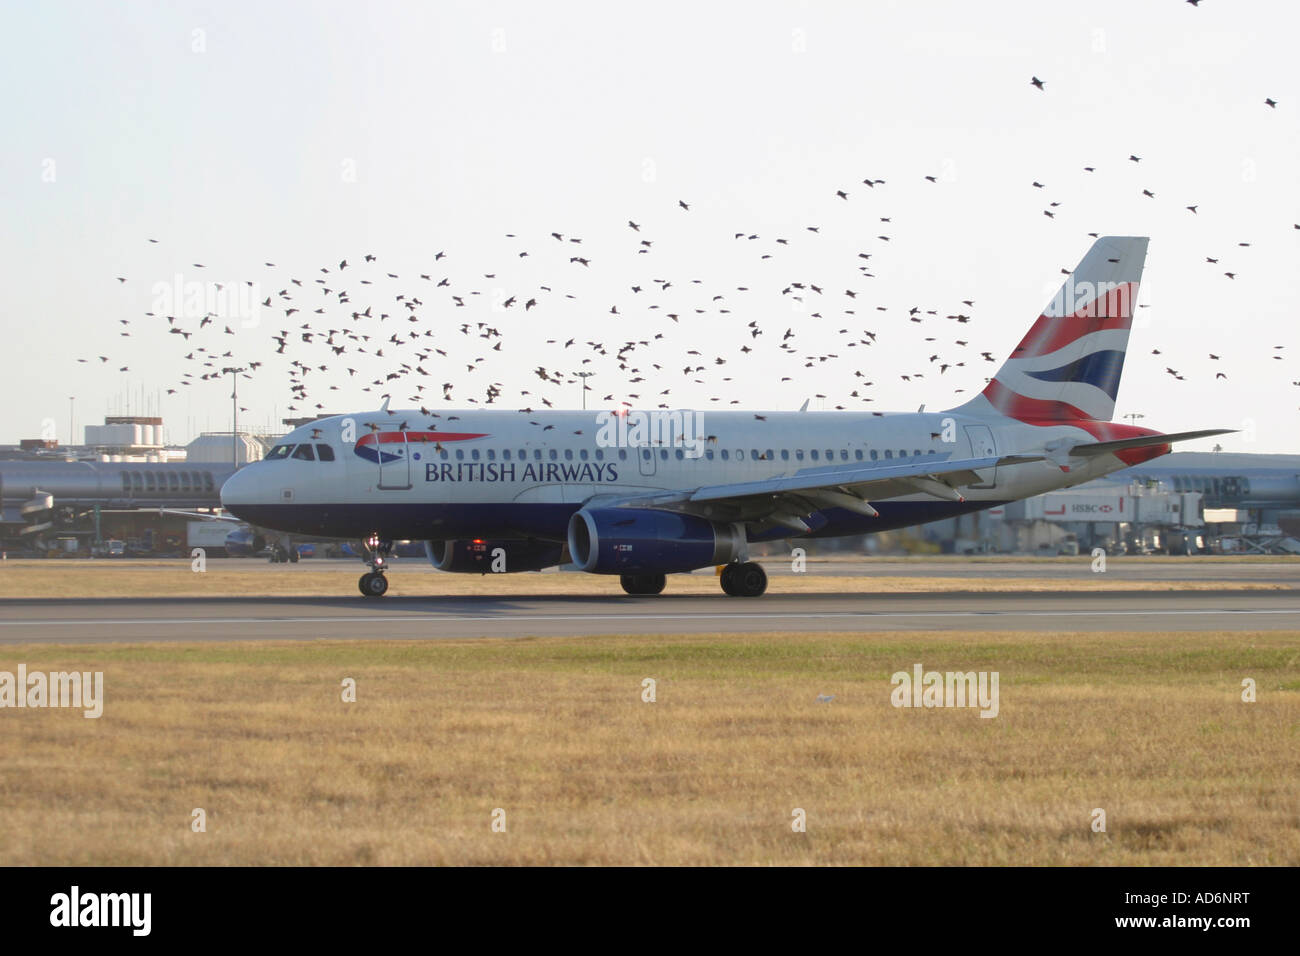 British Airways passenger airplane and flock of birds flying close Stock Photo